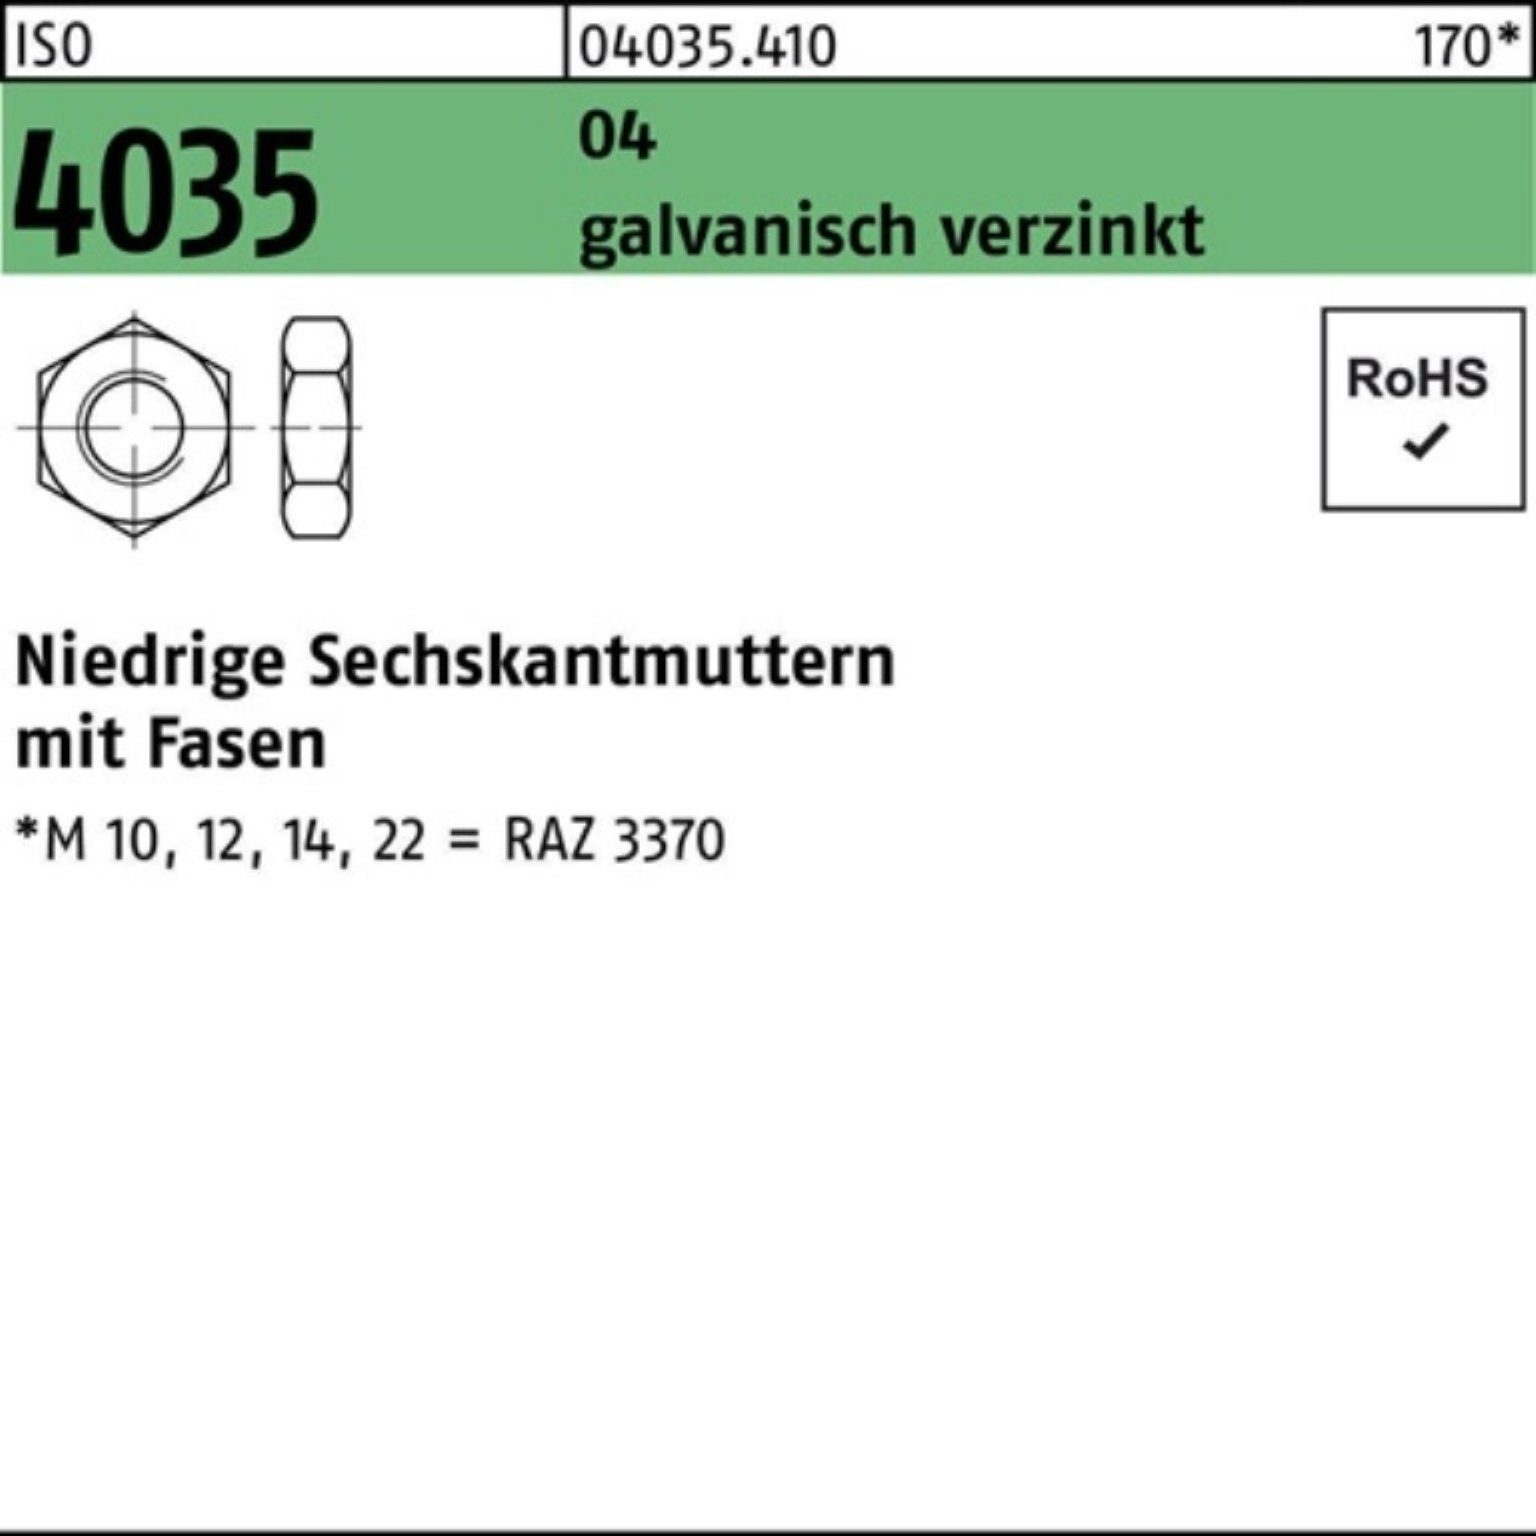 Reyher Muttern Automatenstahl Sechskantmutter Fasen 4035 g 100er ISO niedrig M30 Pack